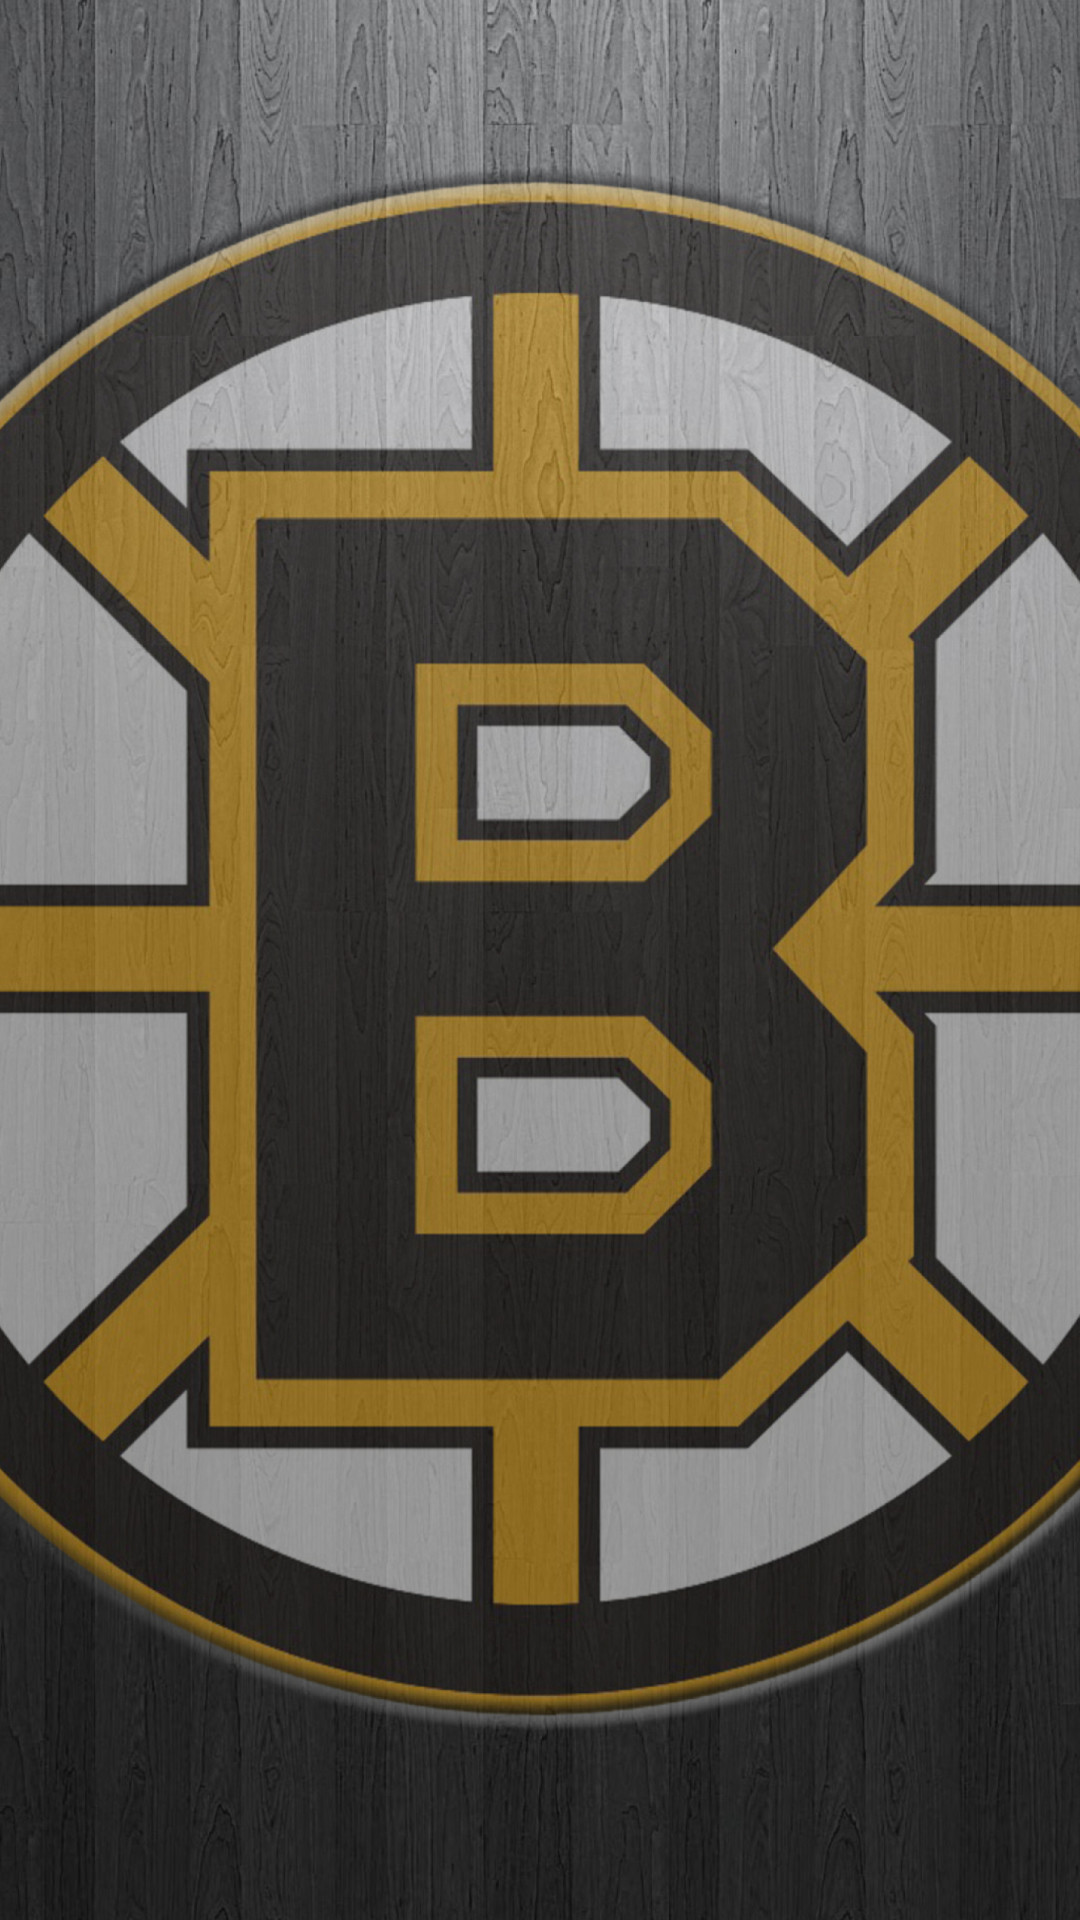 Boston Bruins IPhone Wallpaper.